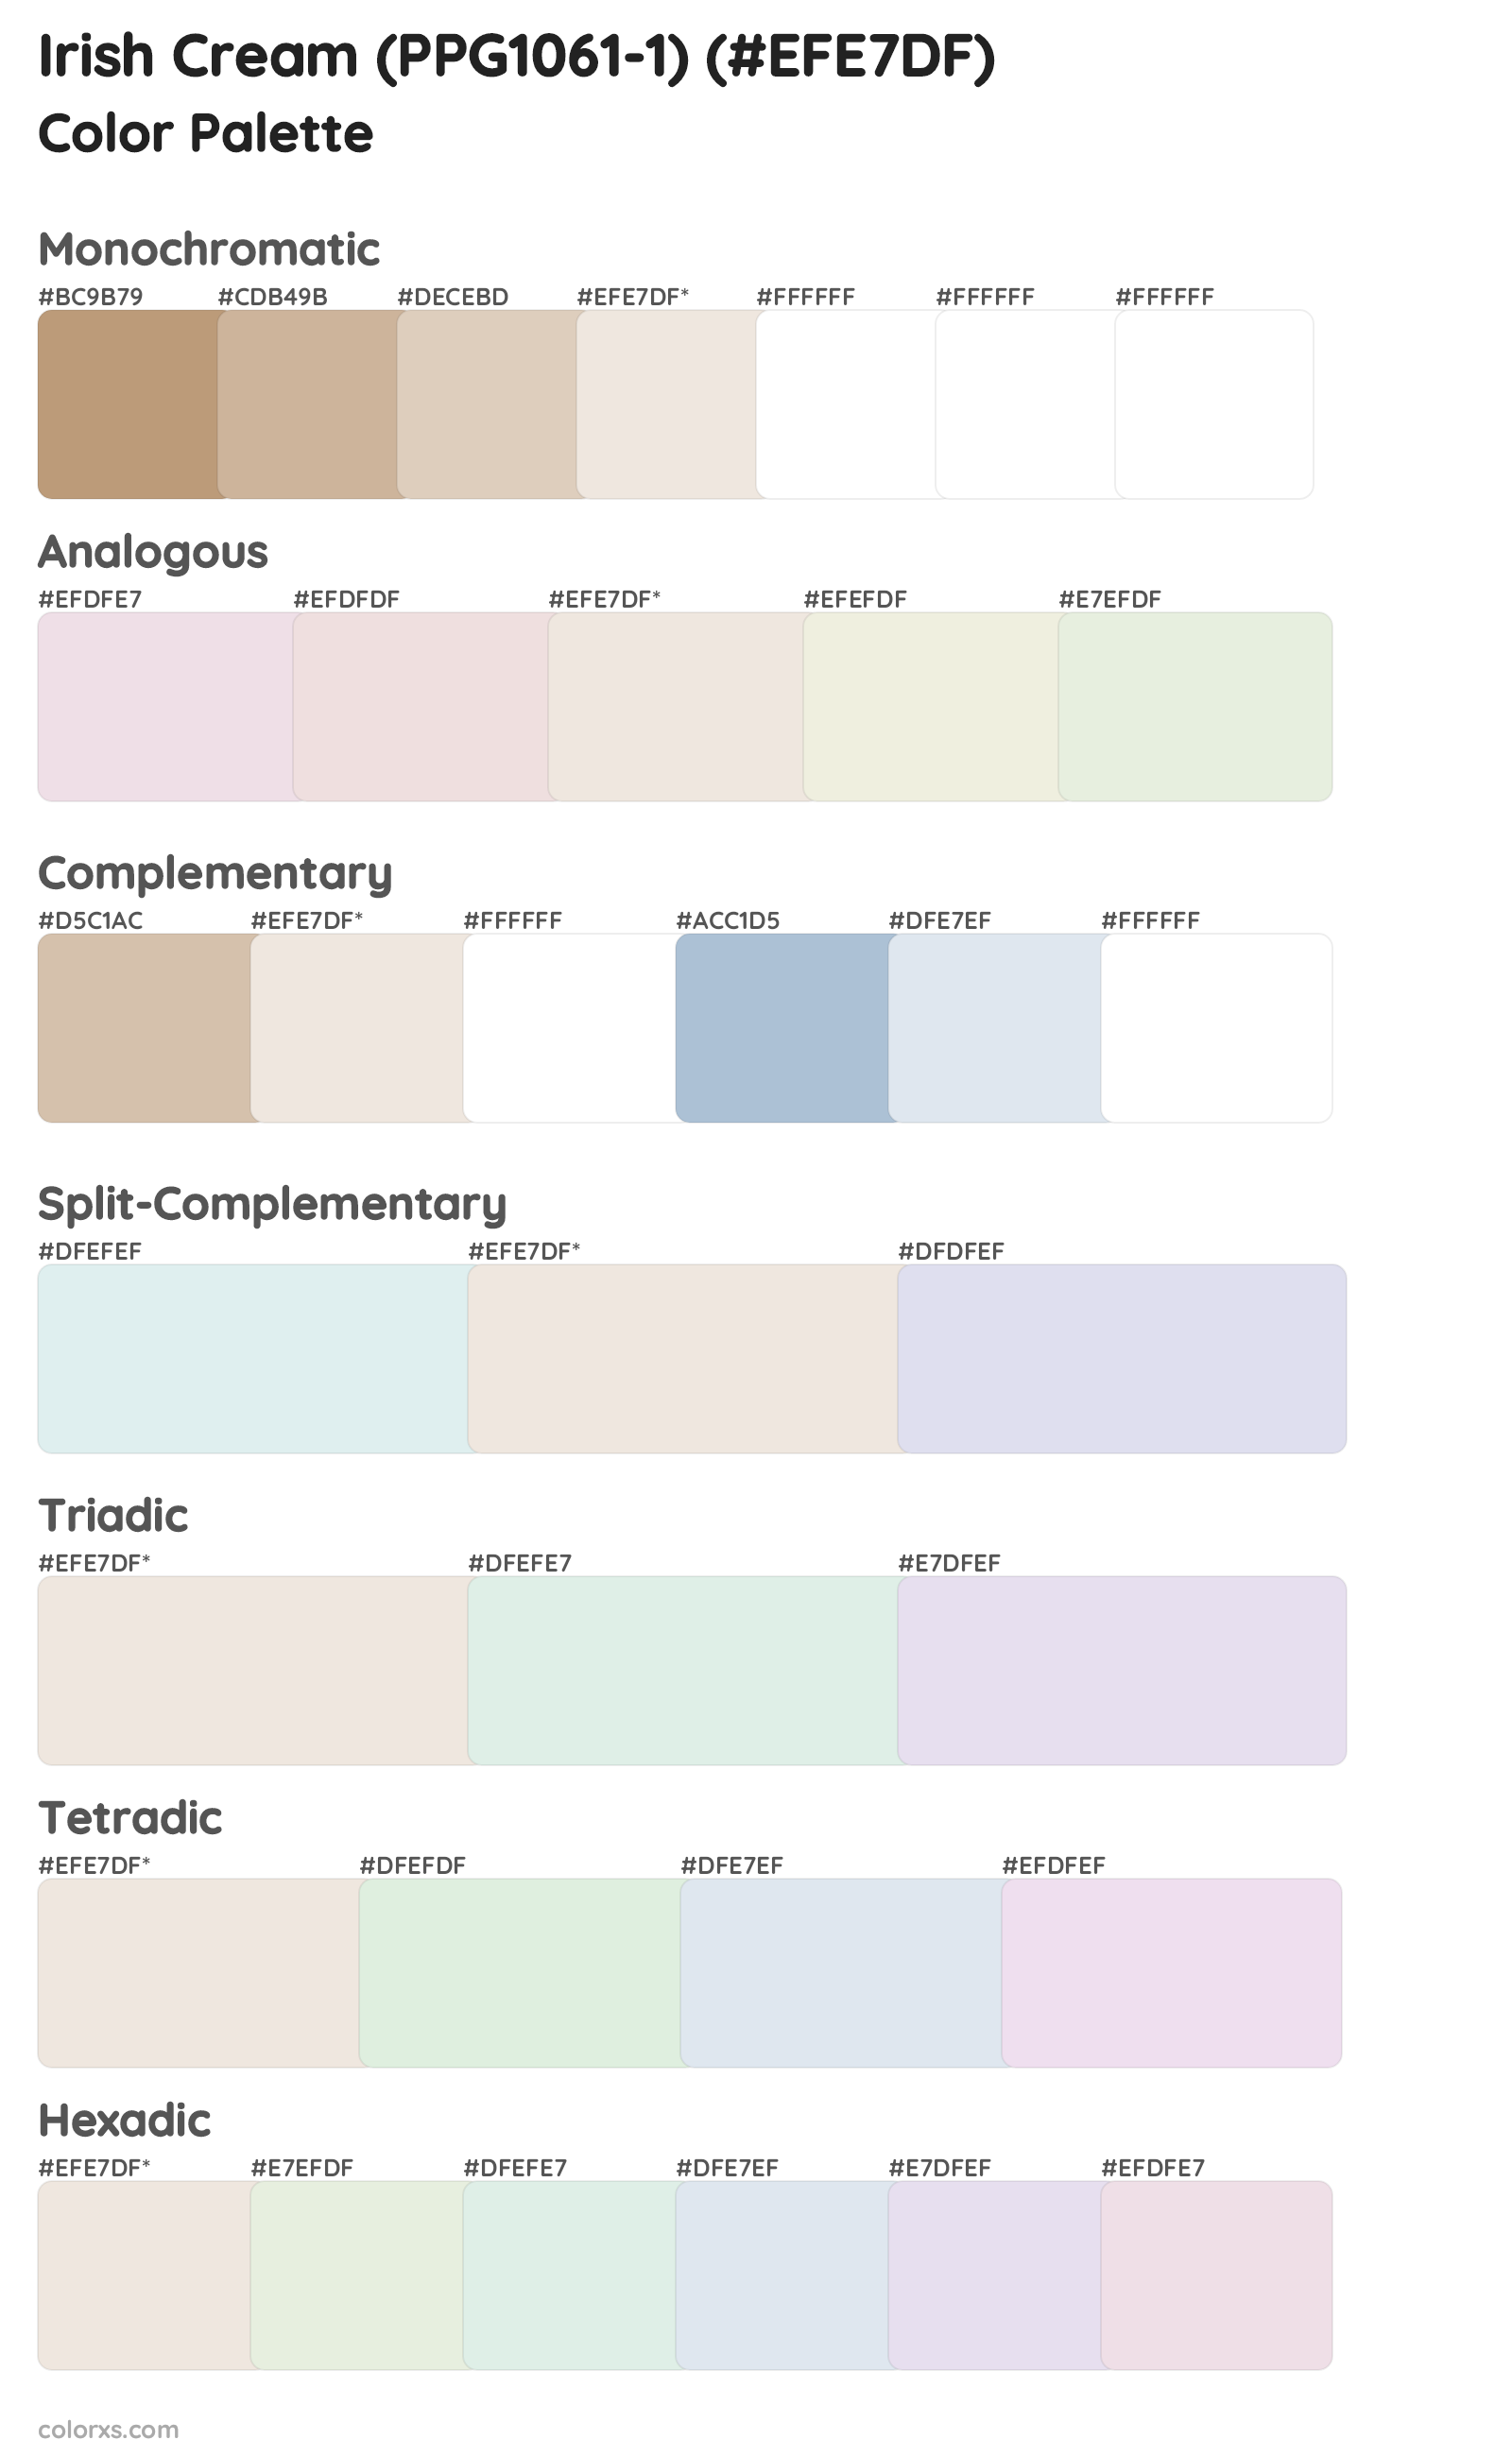 Irish Cream (PPG1061-1) Color Scheme Palettes